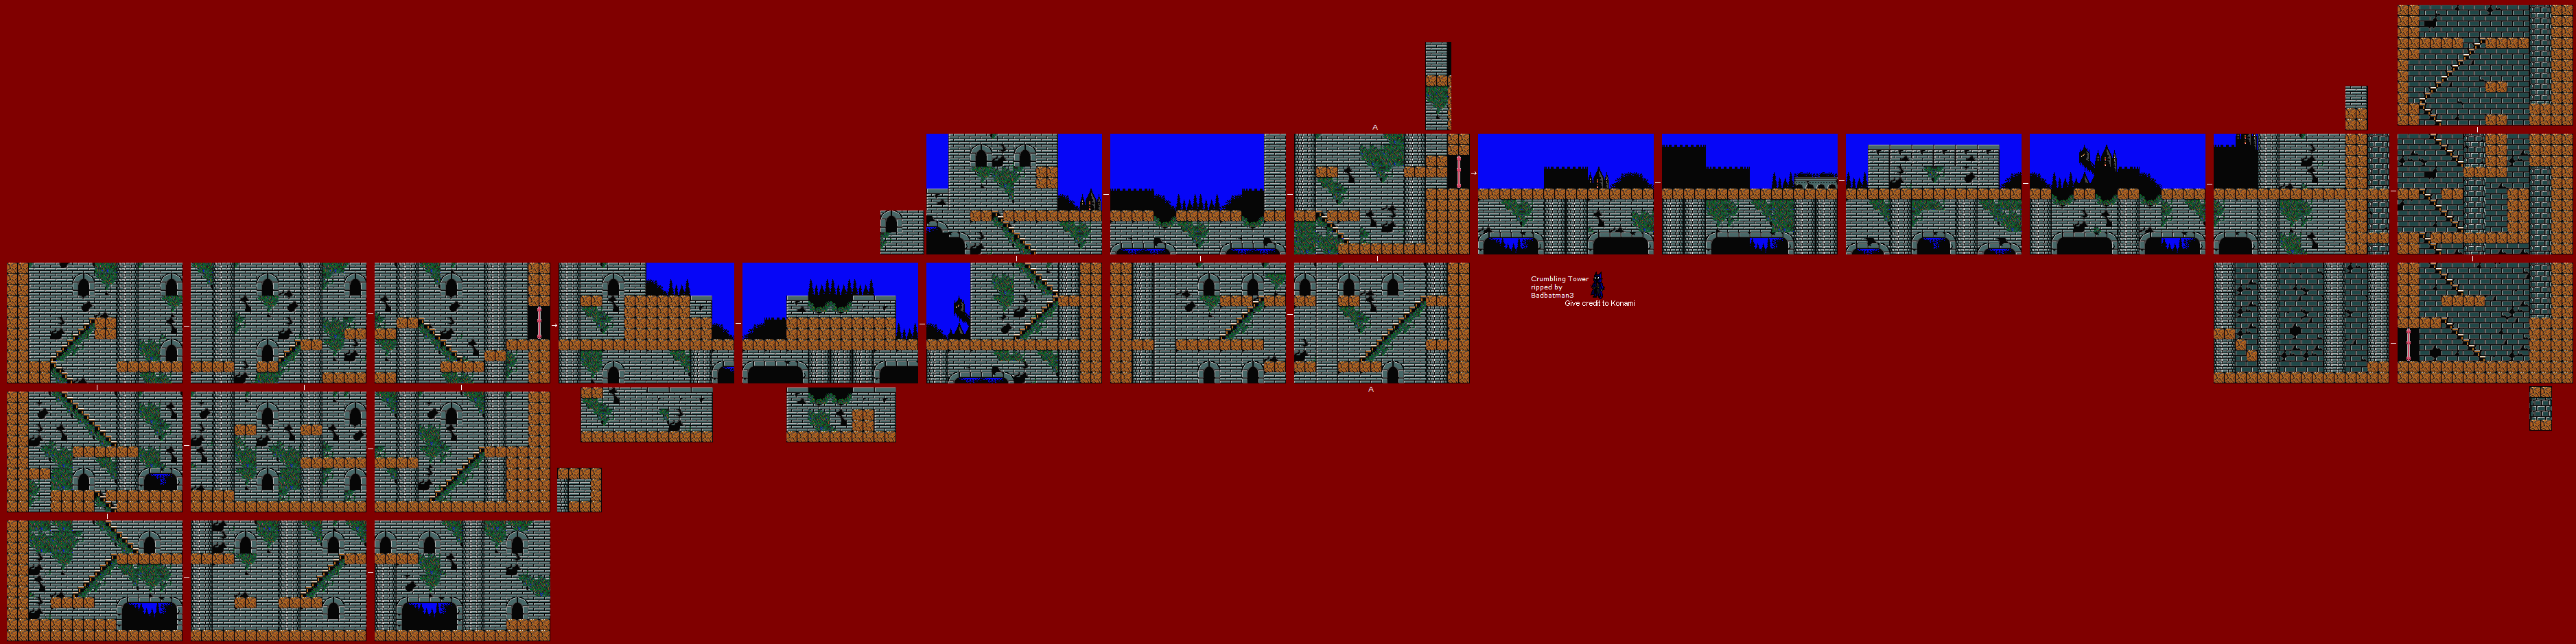 Vampire Killer (MSX2) - Stage 3: Crumbling Tower